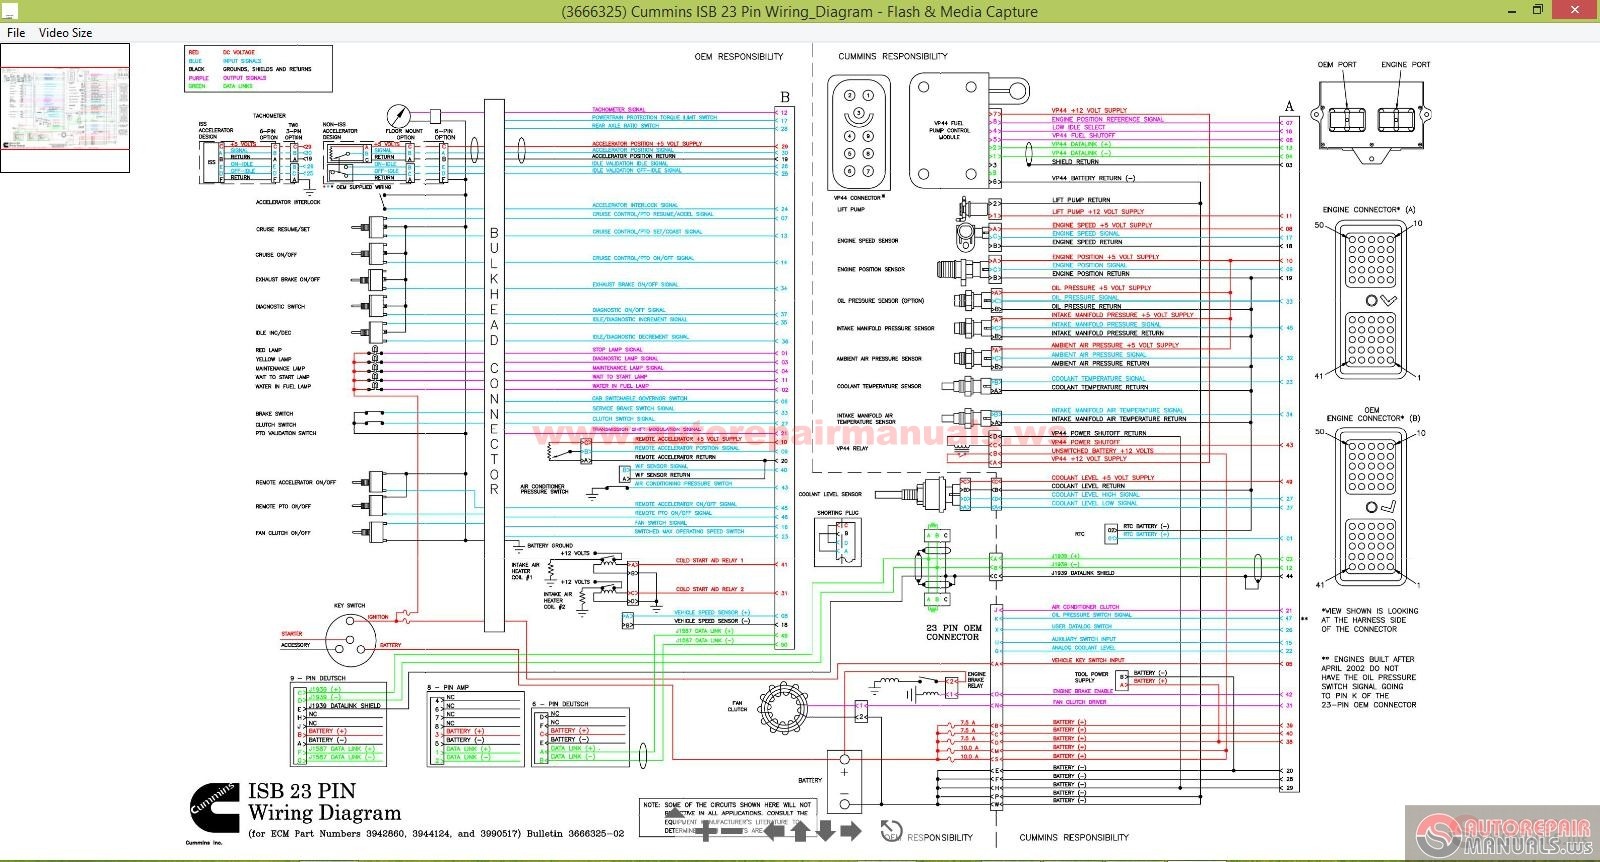 1999 discovery freightliner motorhome 5.9 engine ecm wiring diagram